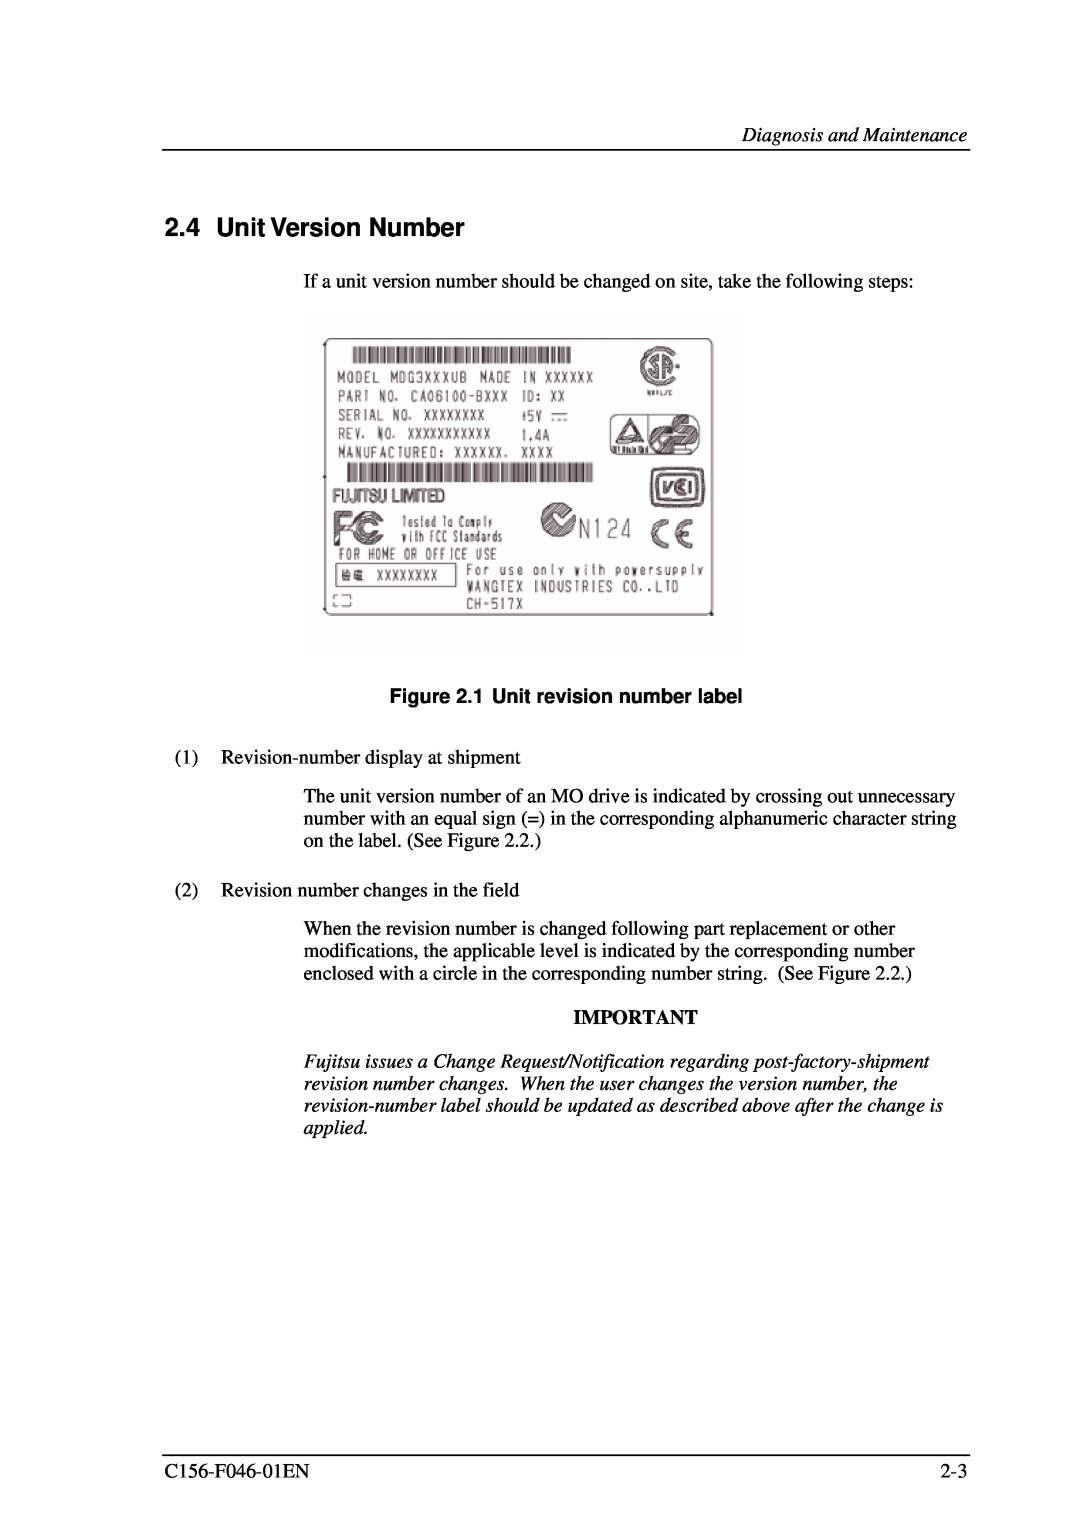 Fujitsu MDG3130UB, MDG3064UB manual Unit Version Number, Diagnosis and Maintenance, 1 Unit revision number label 